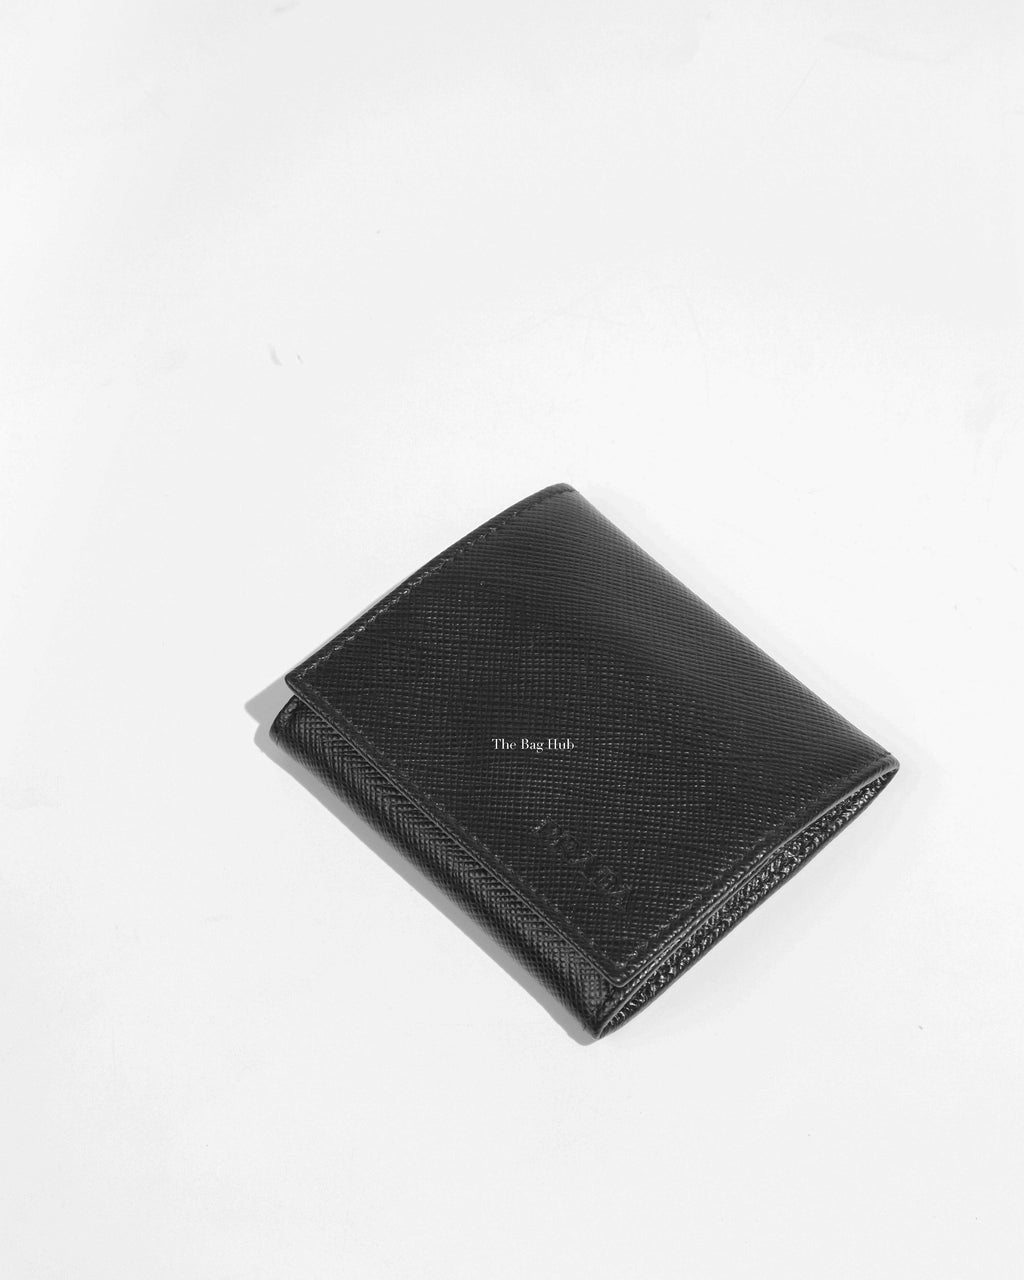 Prada Black Saffiano Leather Coin Purse - 1